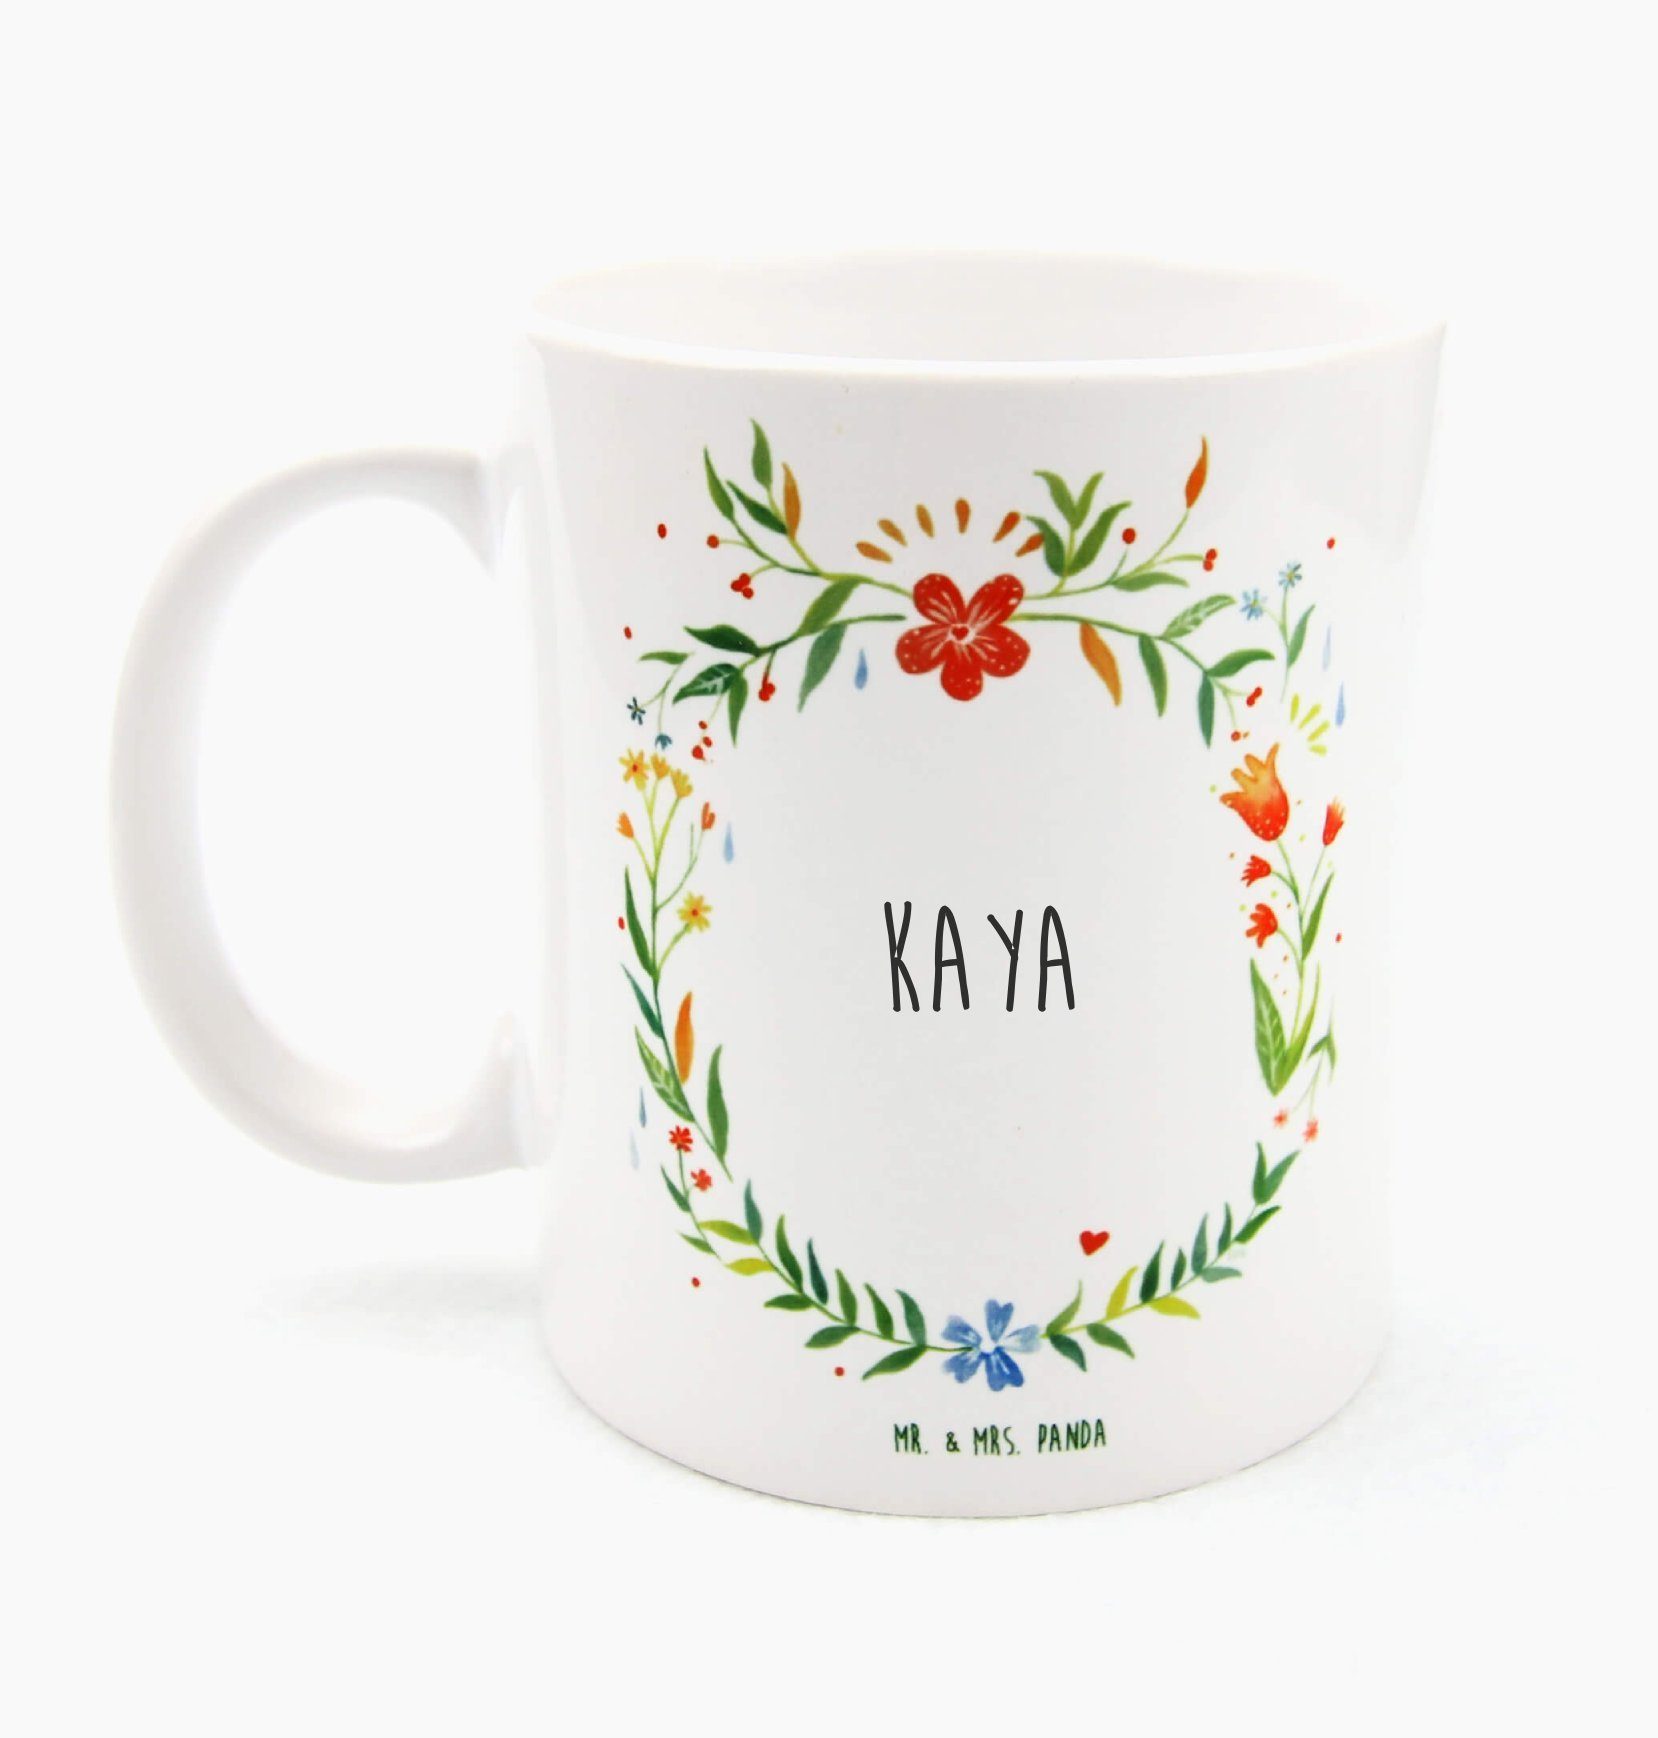 Mr. & Mrs. Panda Tasse Kaya - Geschenk, Kaffeetasse, Porzellantasse, Teetasse, Kaffeebecher, Keramik